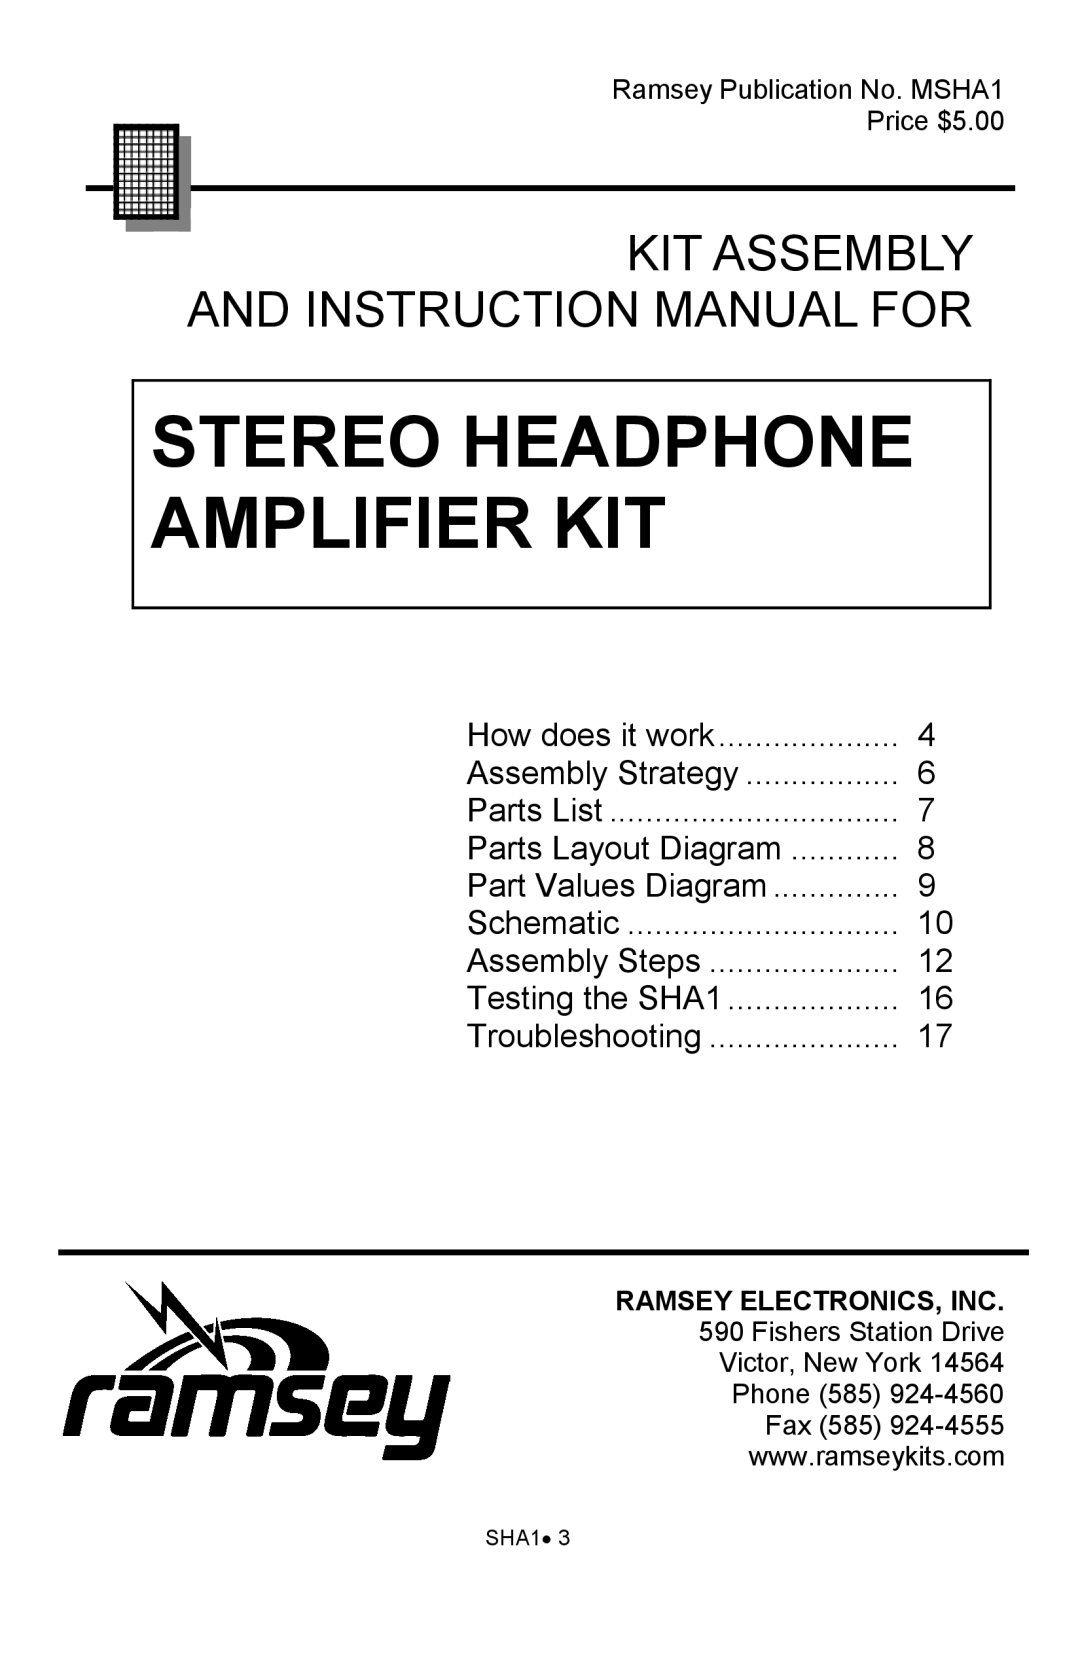 Ramsey Electronics SHA1 manual Stereo Headphone Amplifier Kit, Kit Assembly 